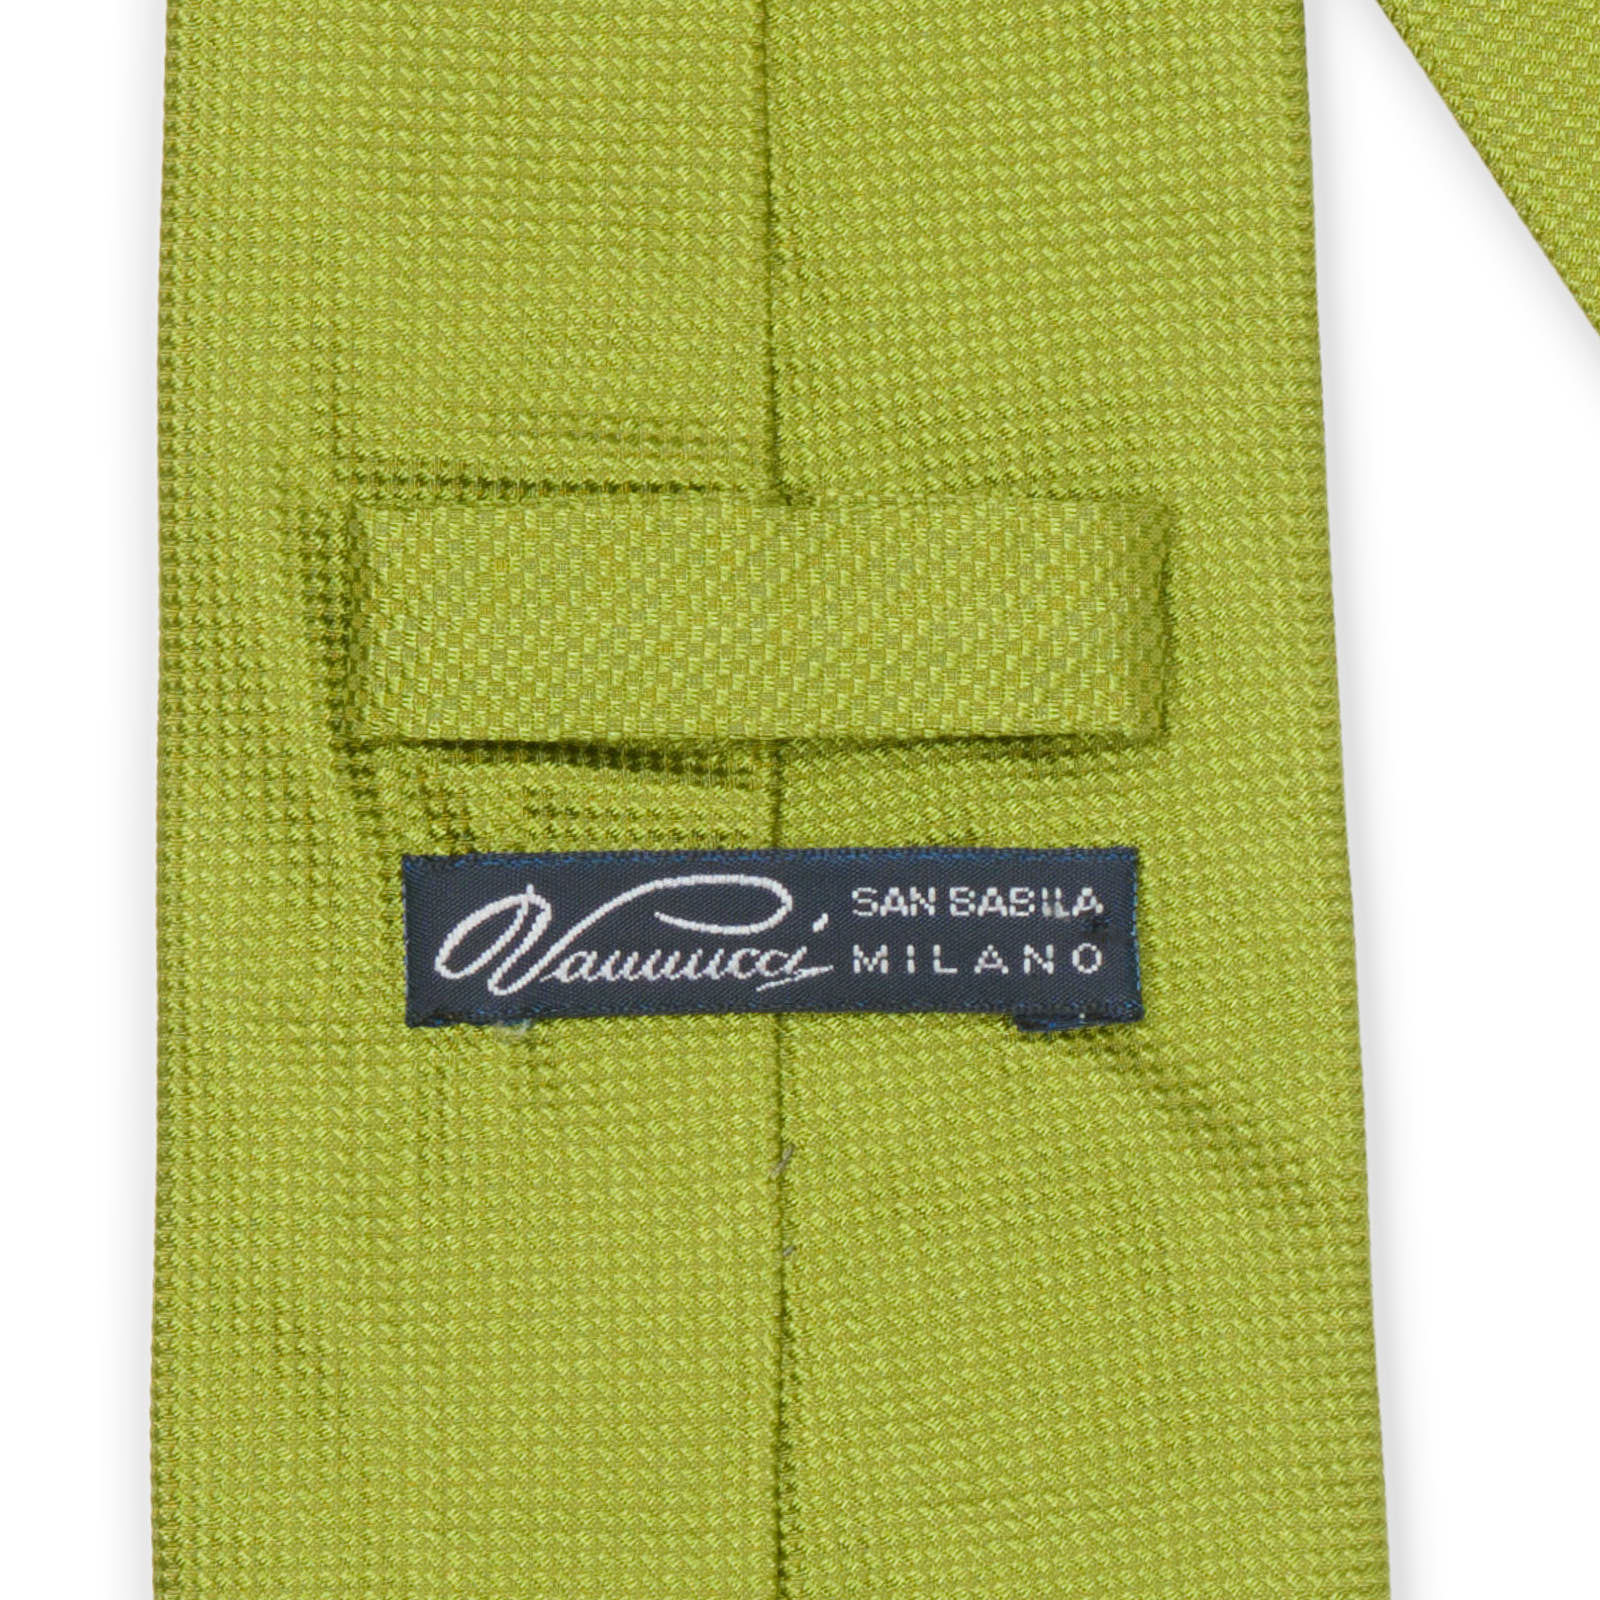 VANNUCCI Light Green Micro Silk Tie NEW